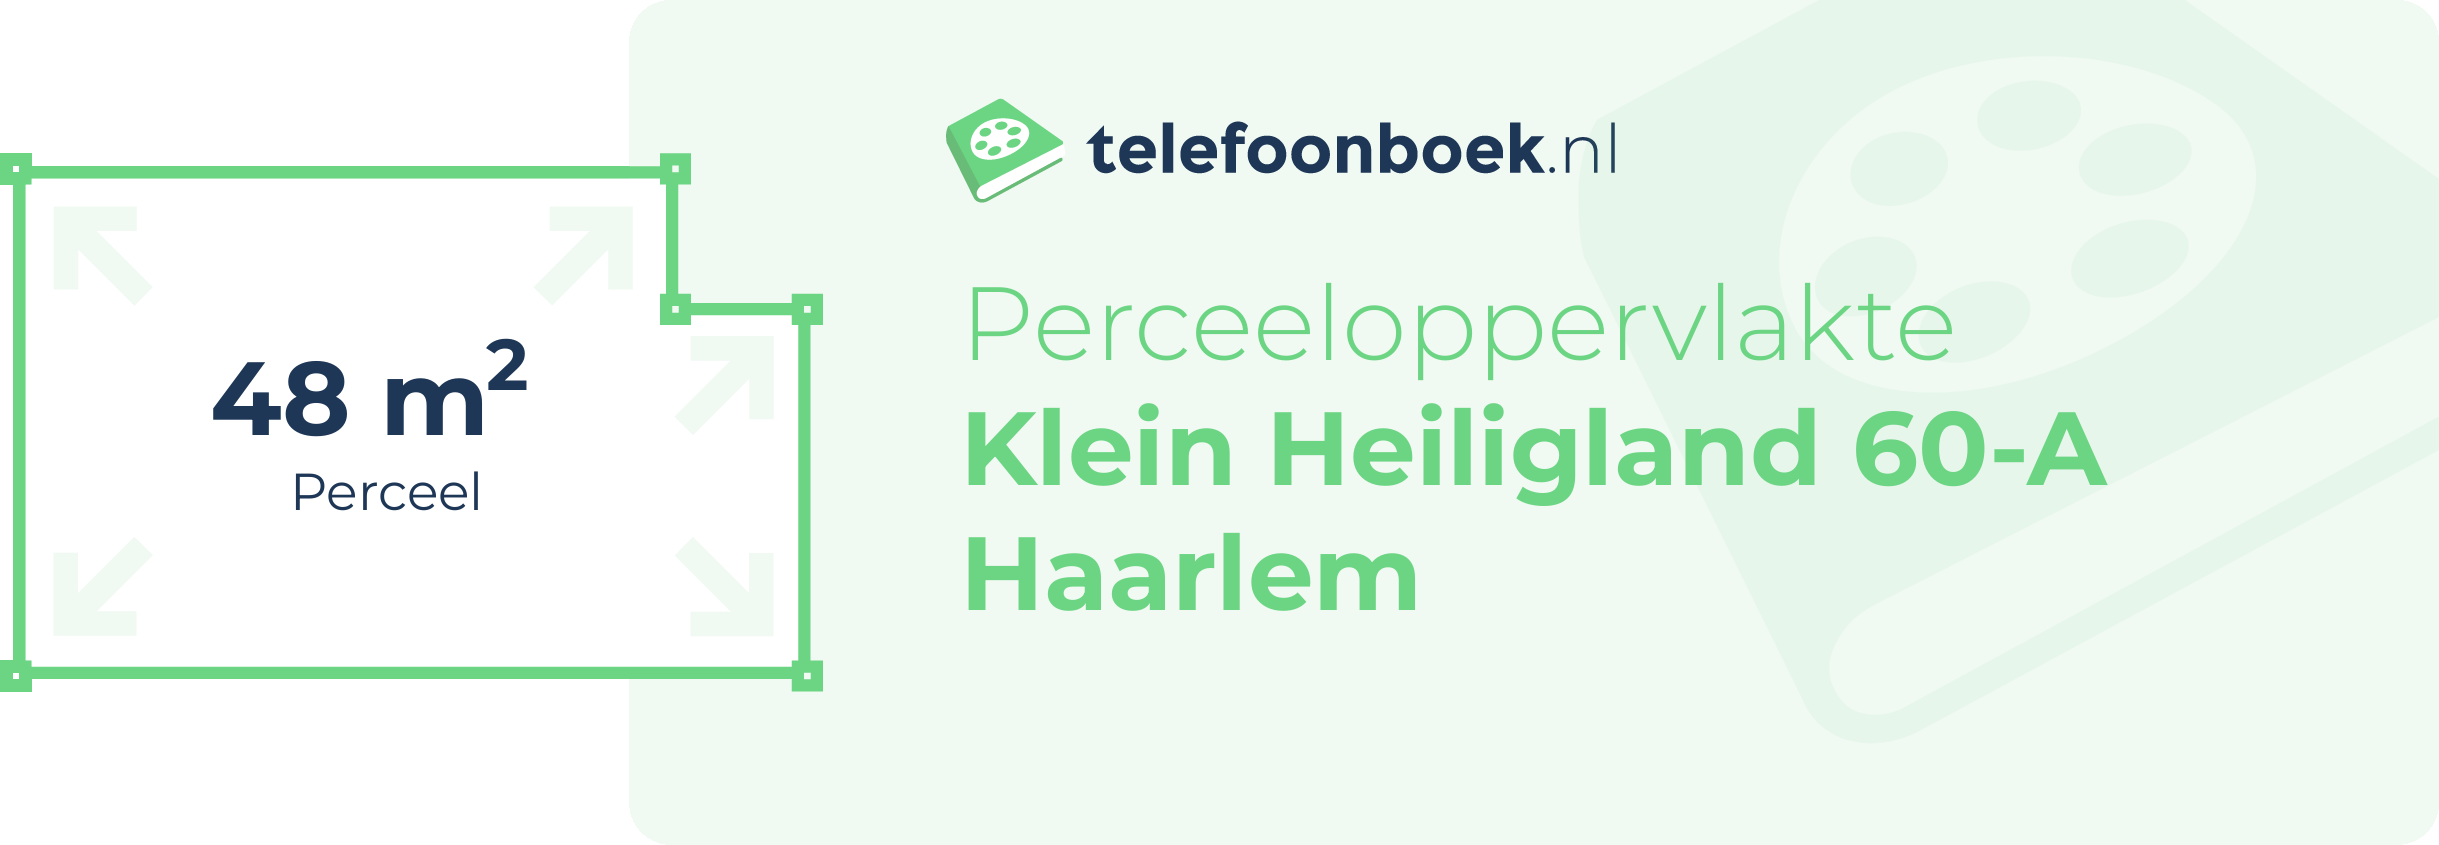 Perceeloppervlakte Klein Heiligland 60-A Haarlem